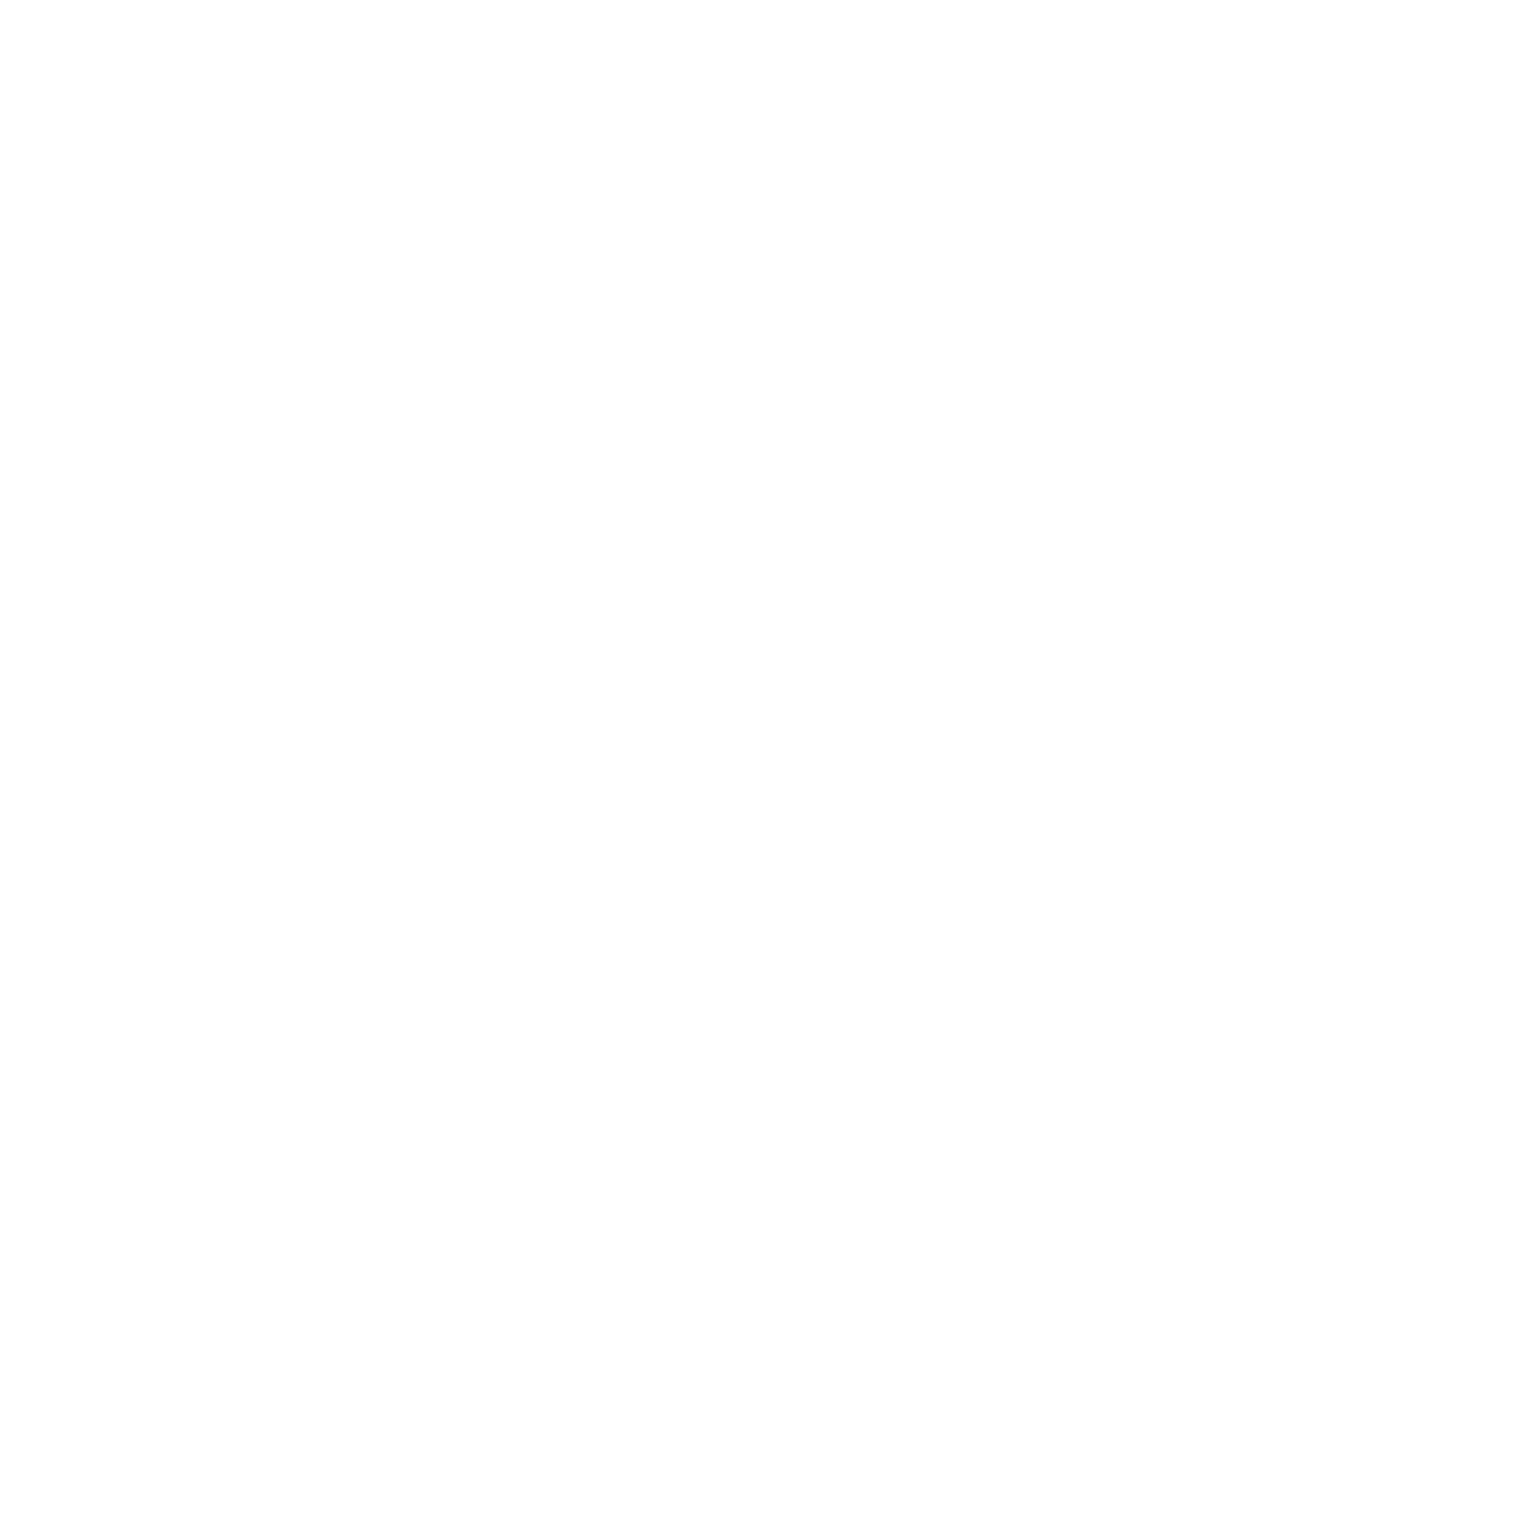 Deutsche Bank logo for dark backgrounds (transparent PNG)